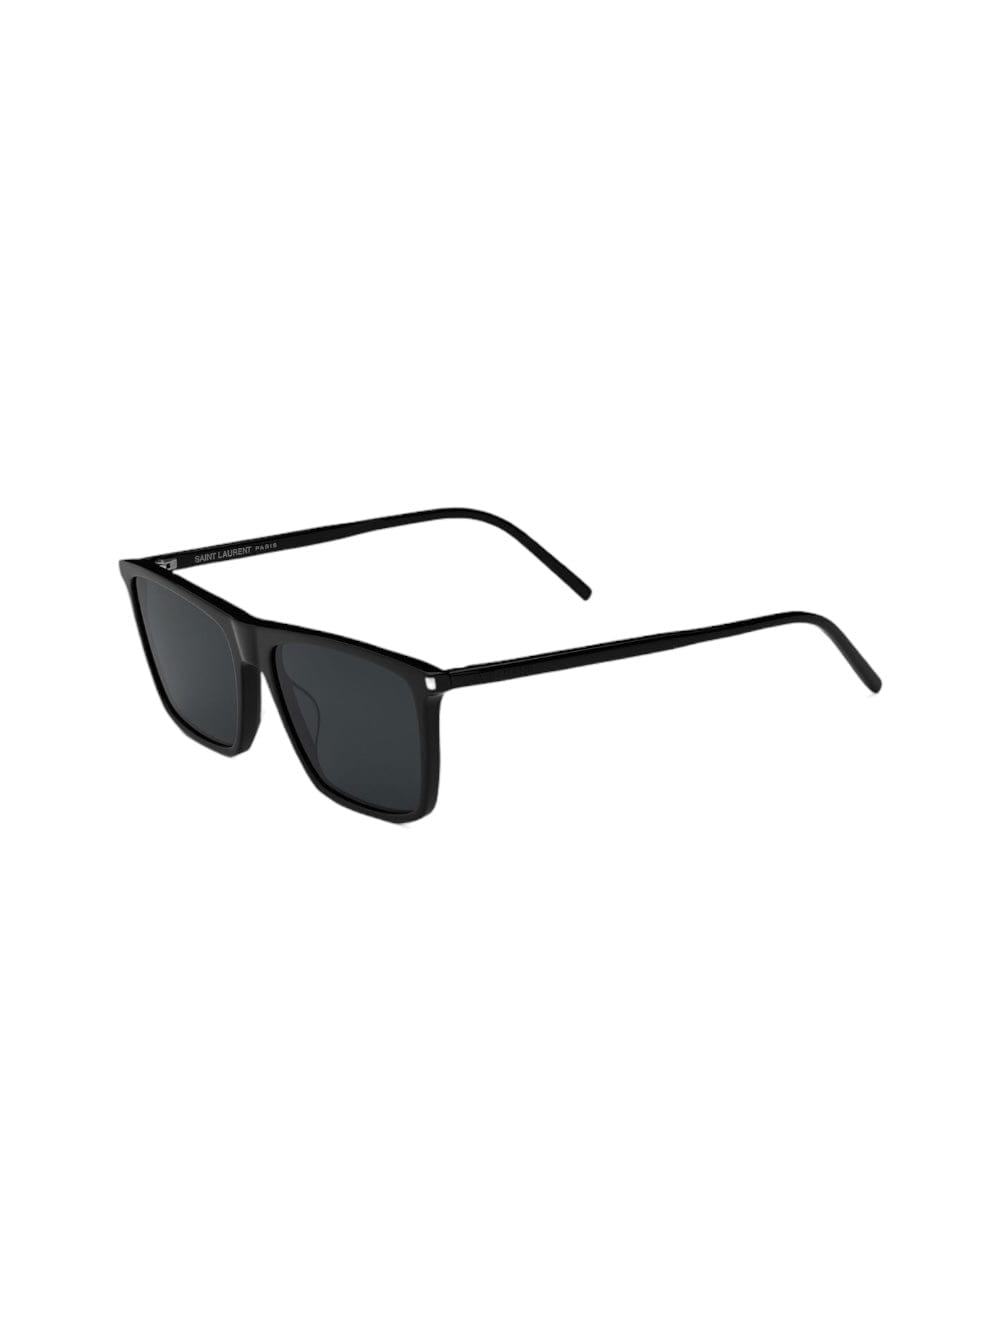 Sl 668 - Black Sunglasses